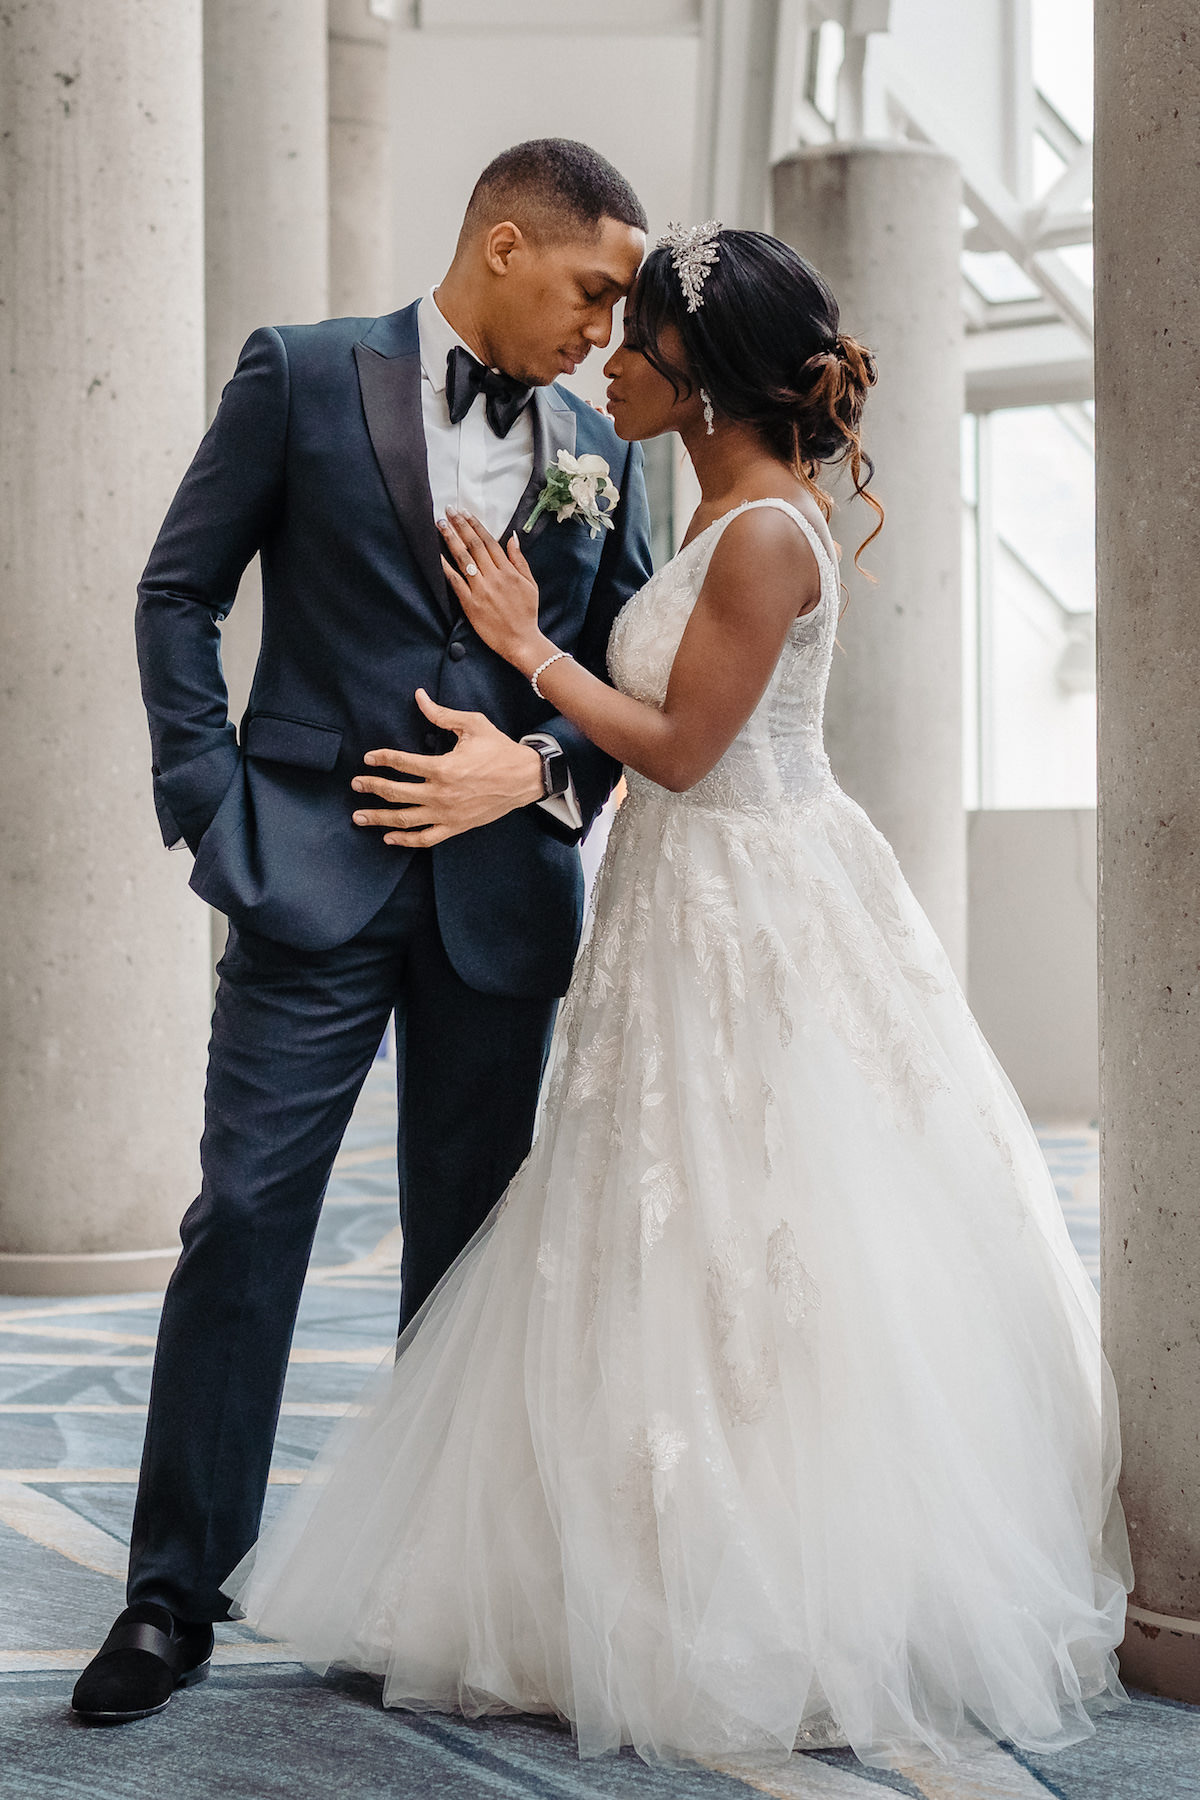 Romantic bride and groom photo - Tunji Studio Photography